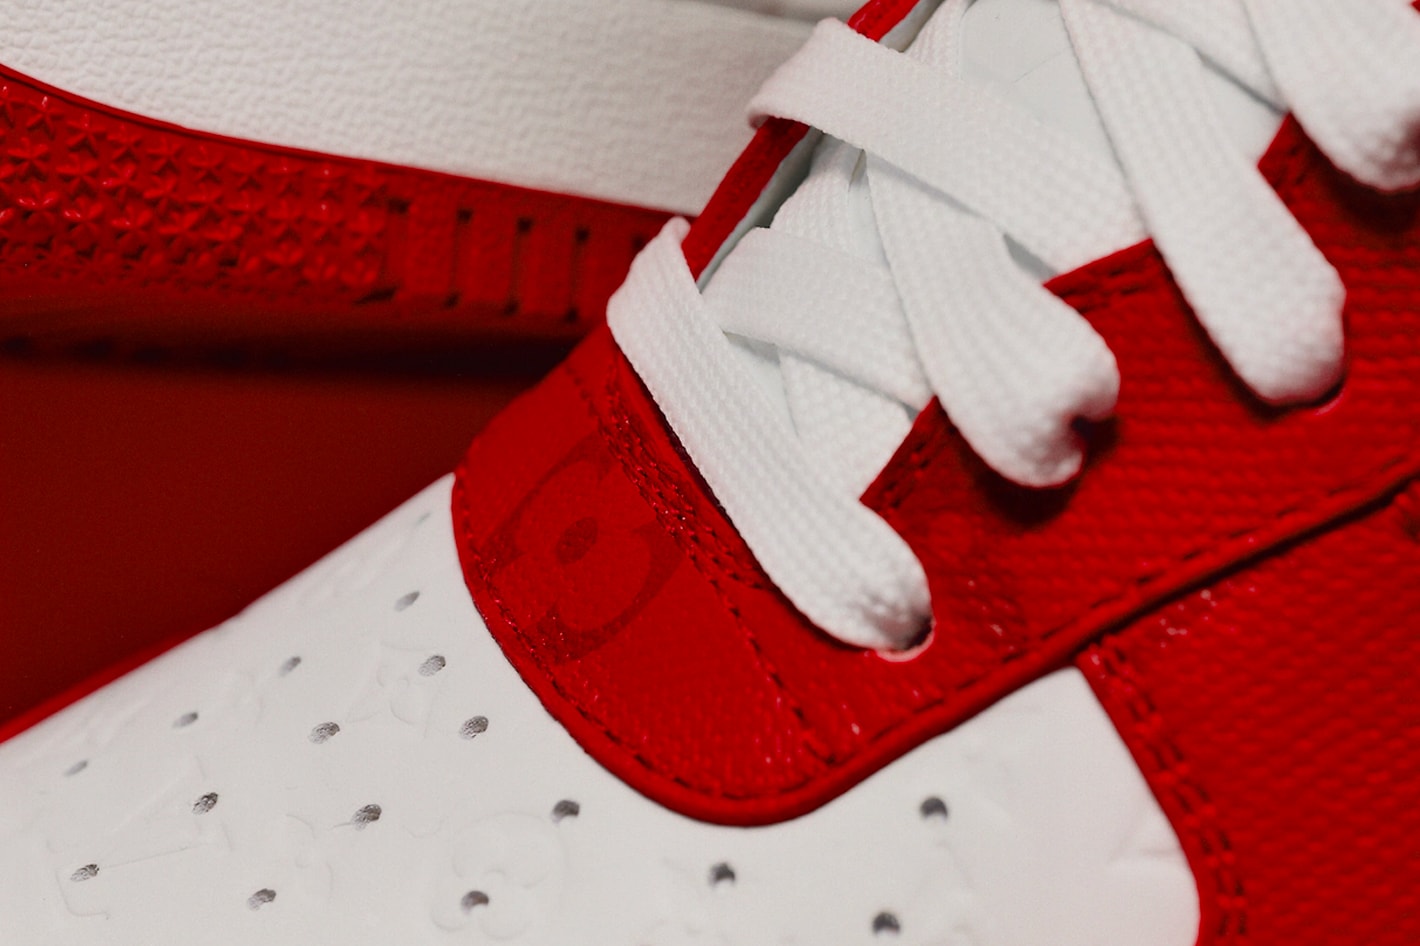 Nike x Louis Vuitton Air Force 1 Low Virgil Abloh - White/Red